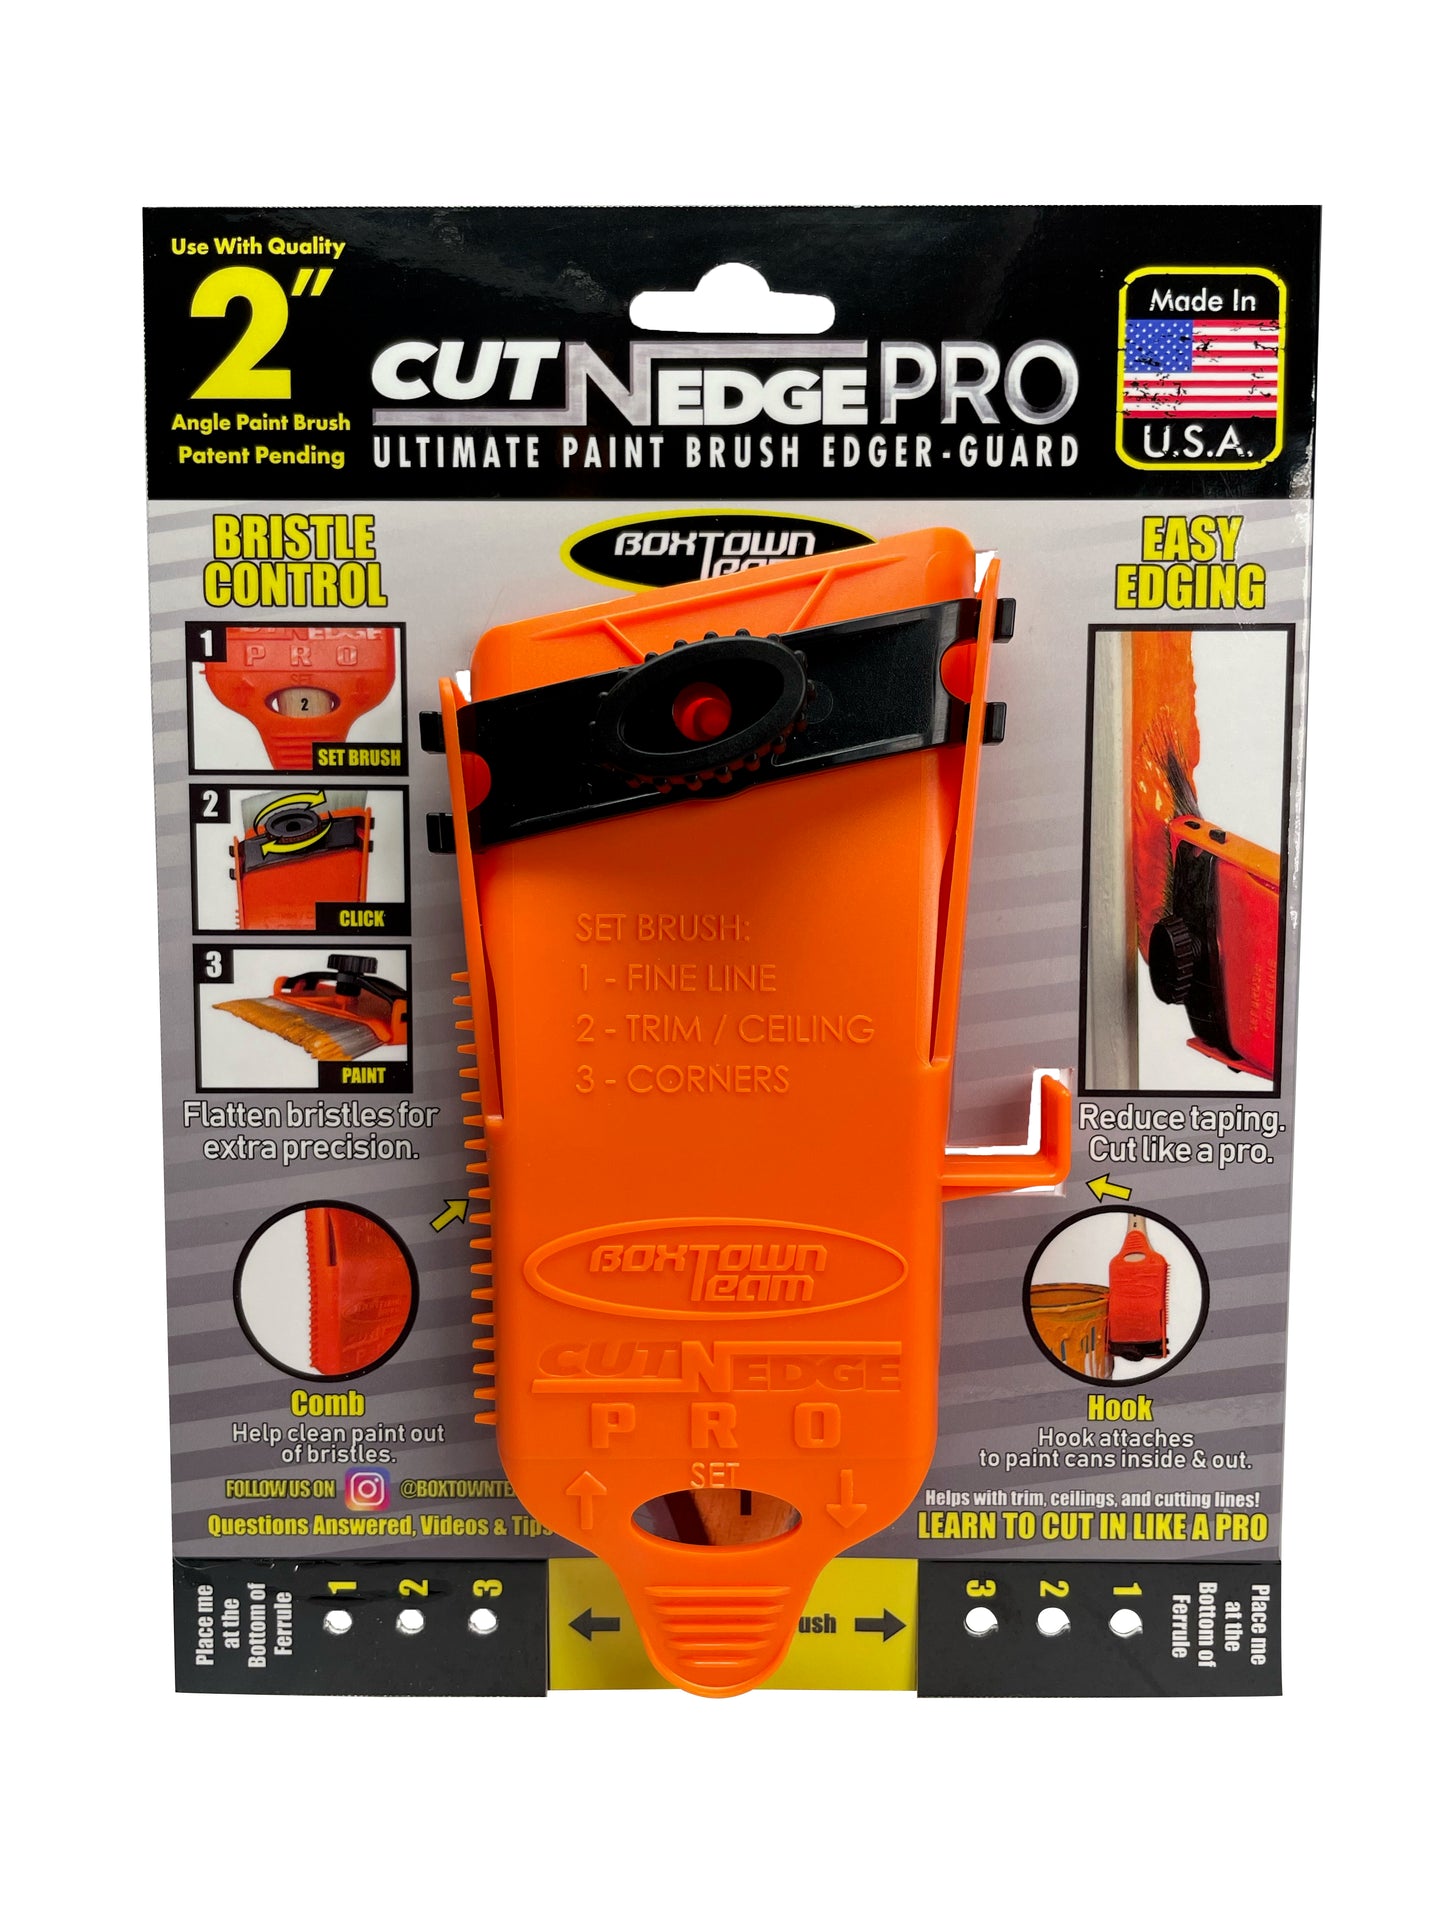 Cut-N-Edge Pro